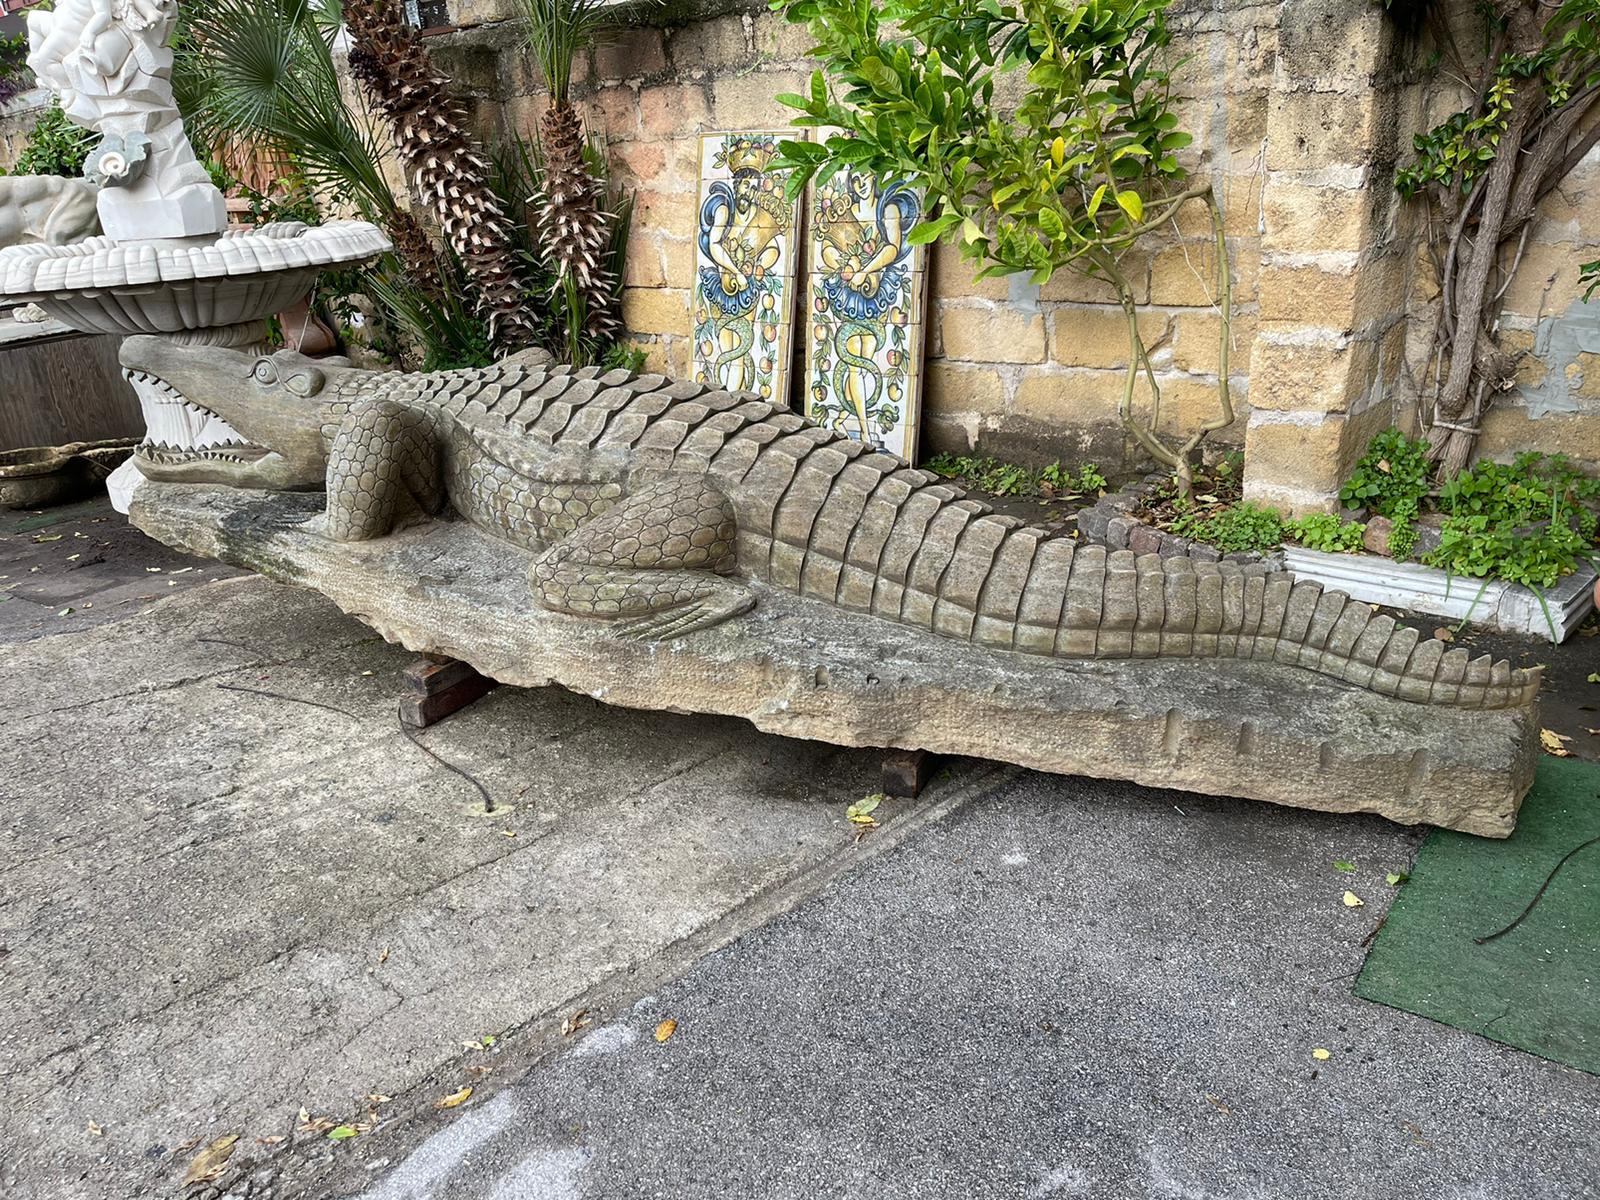 la taille du crocodile